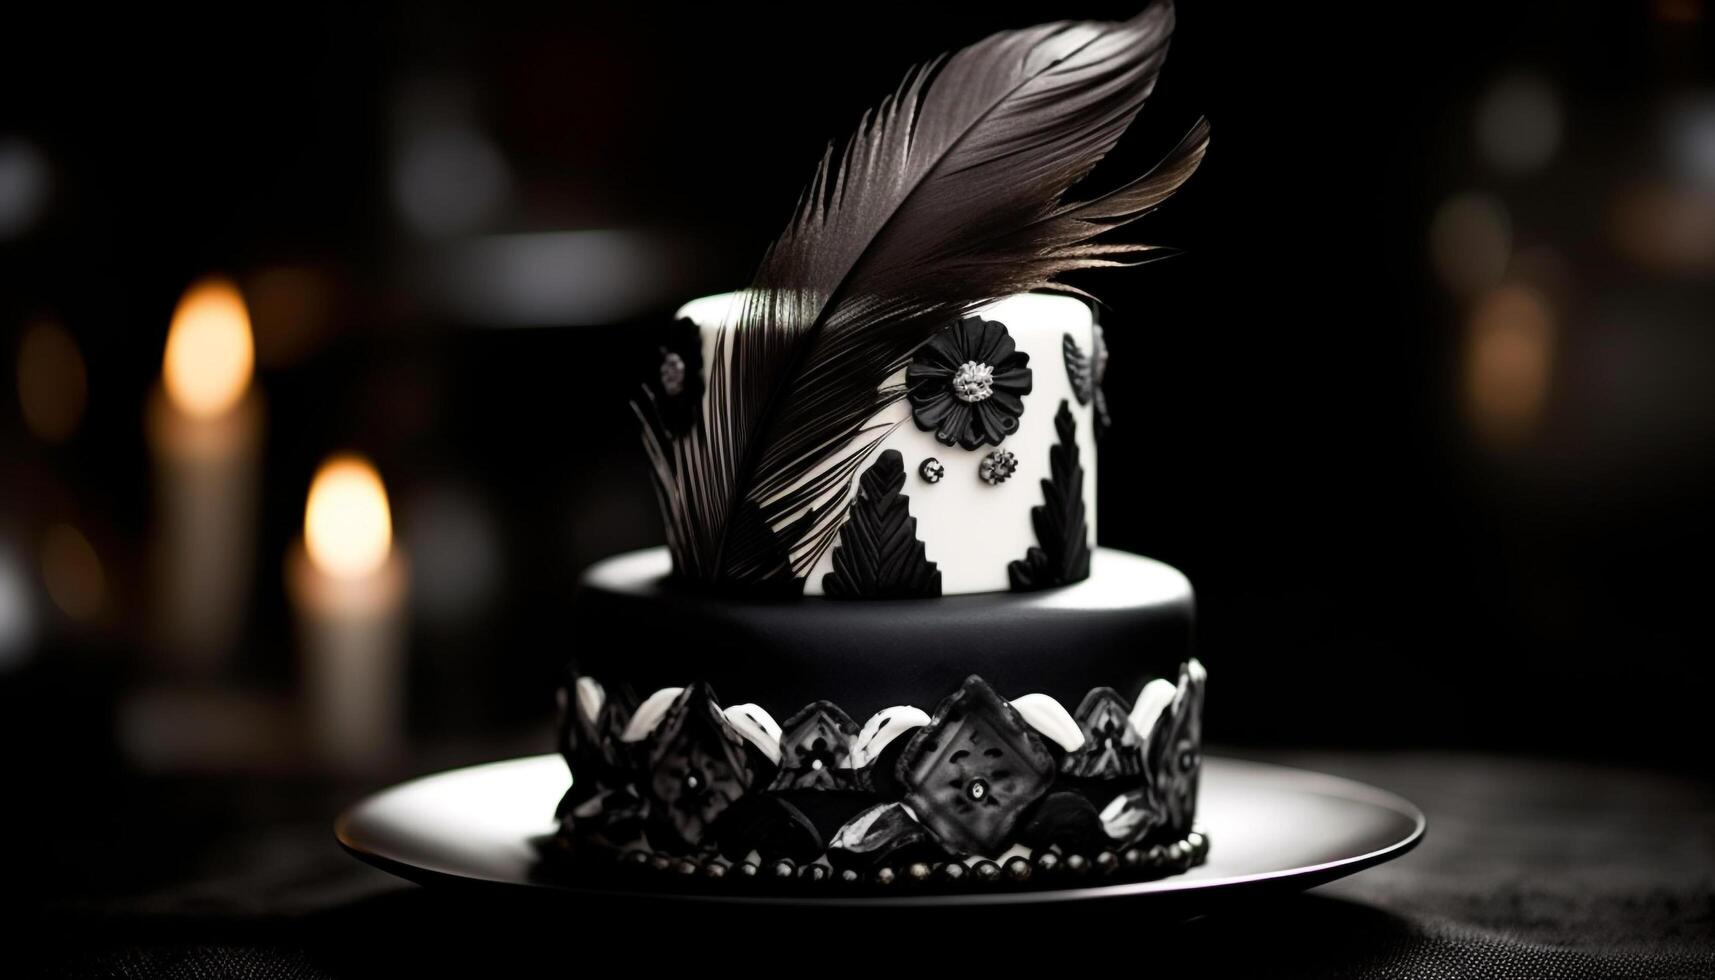 Luxury wedding cake illuminated by candlelight flame generated by AI photo